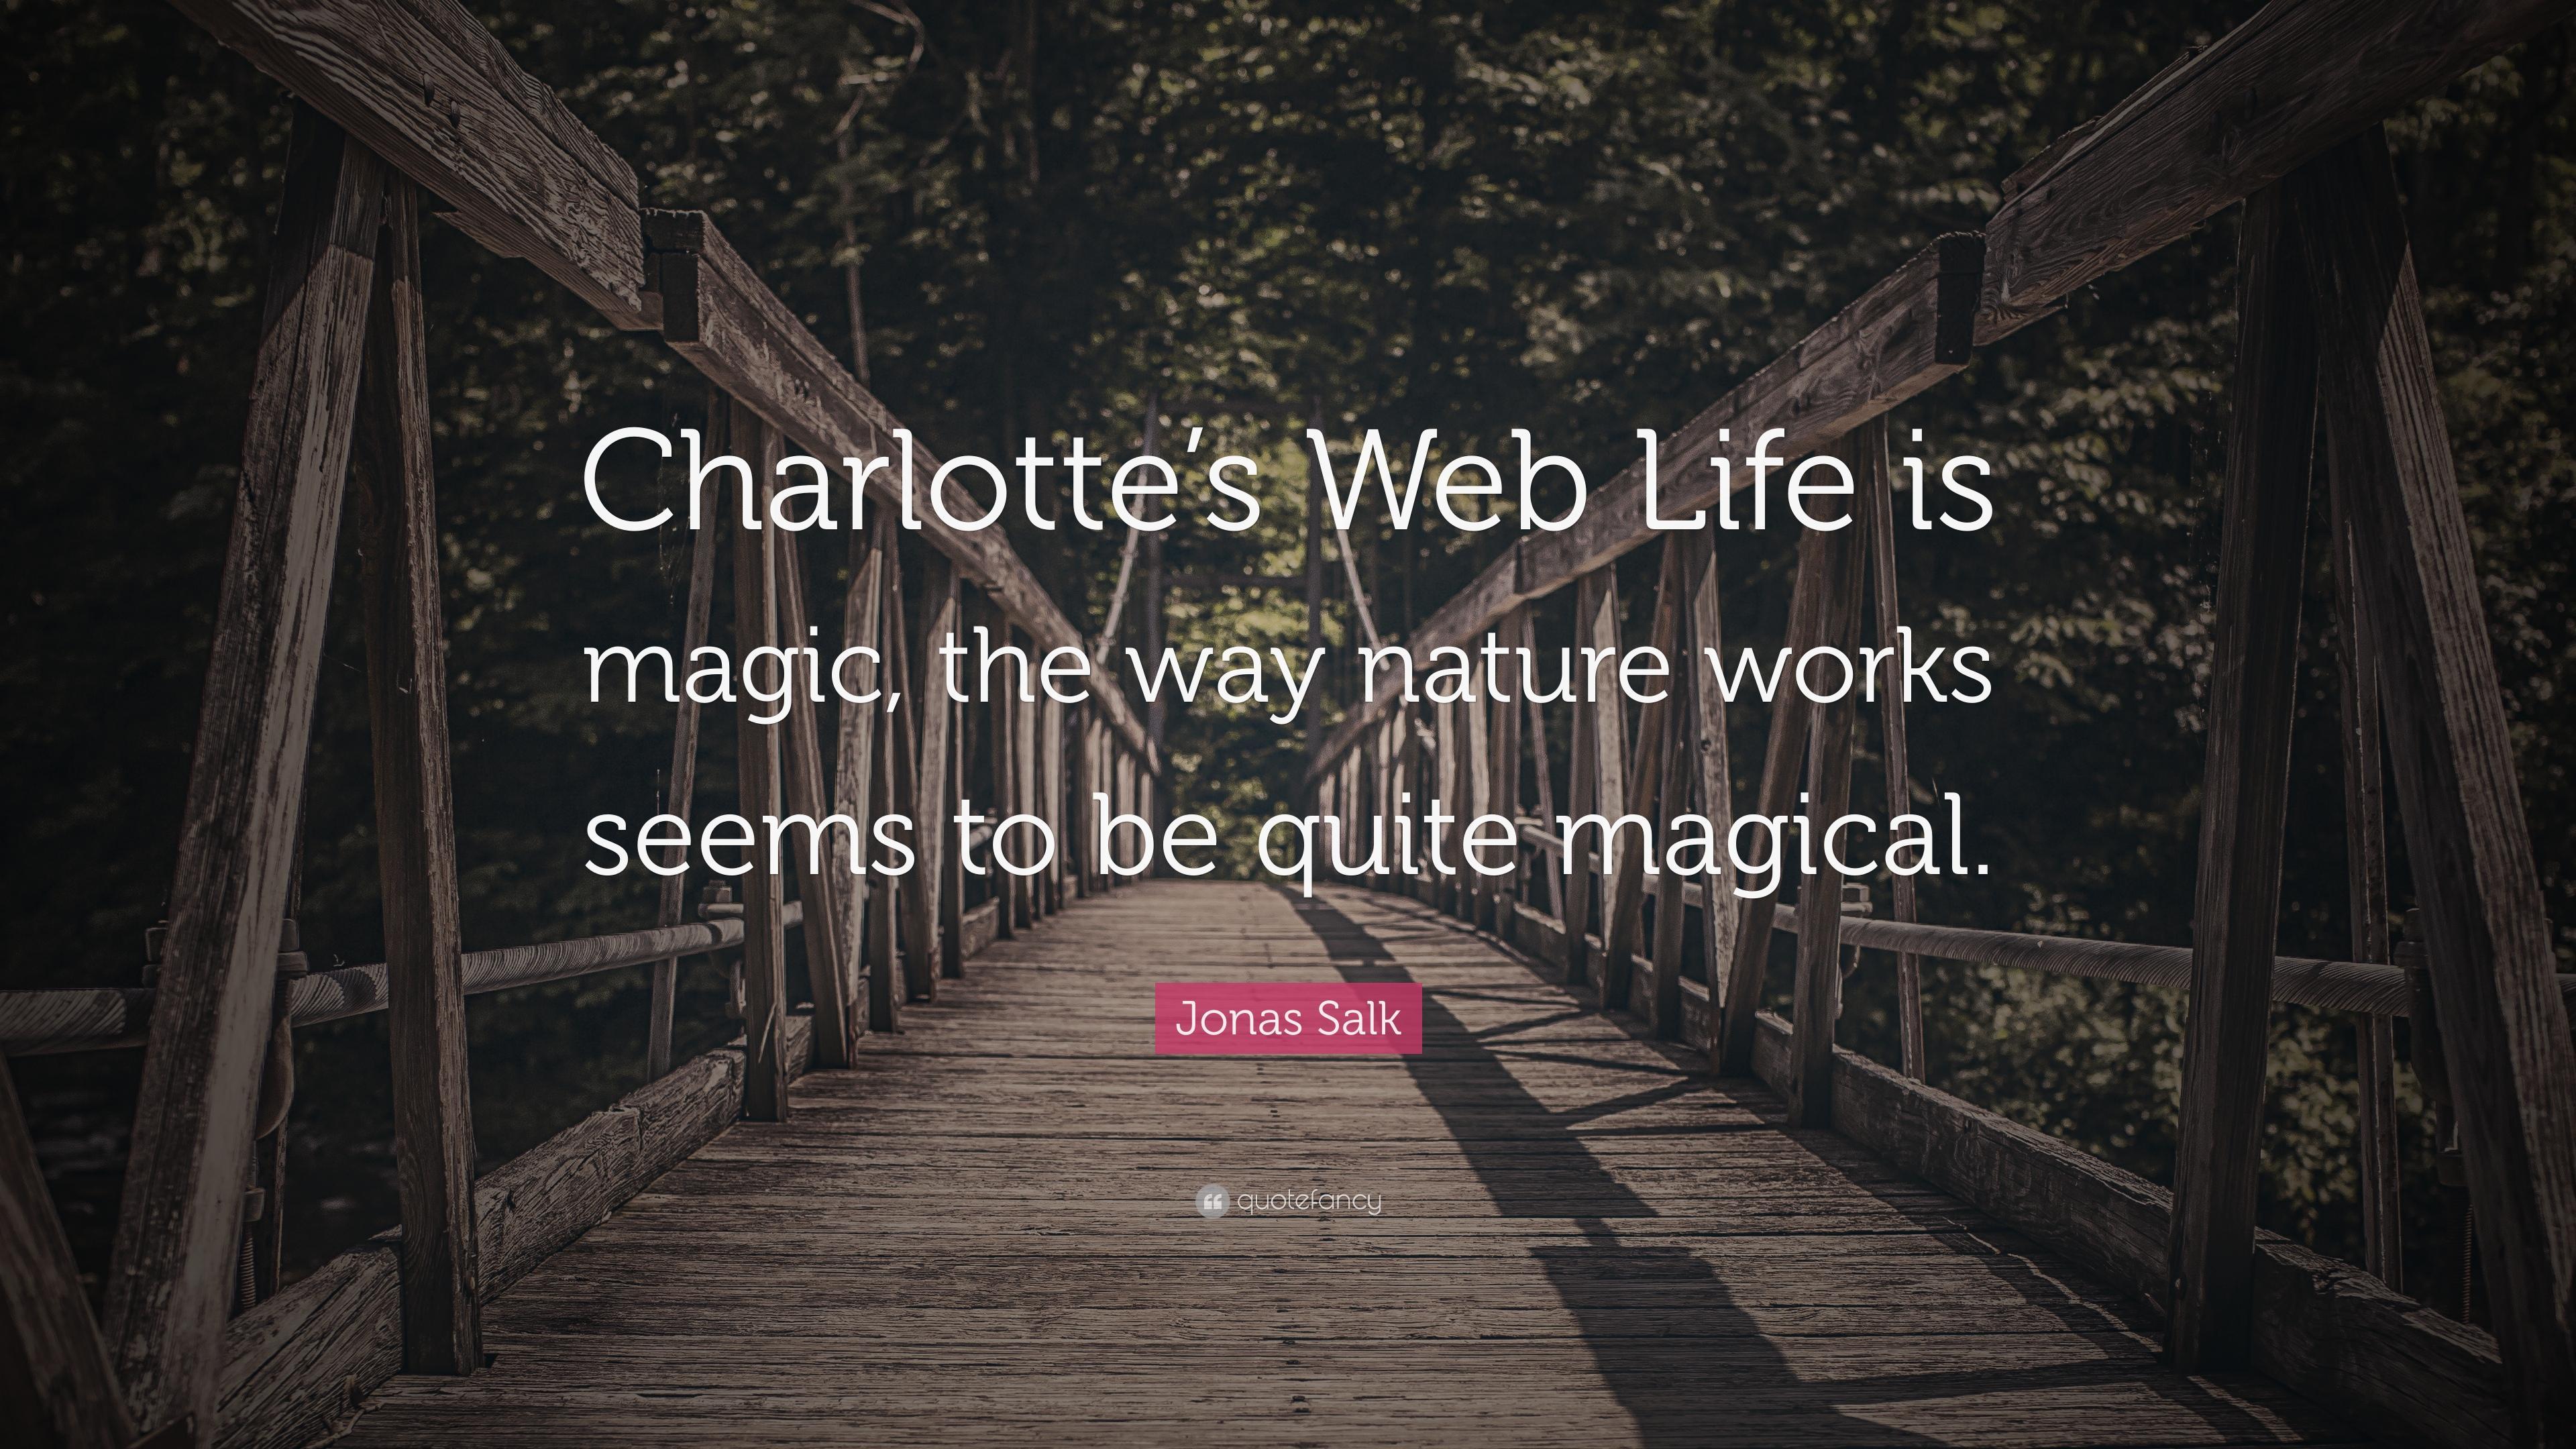 Jonas Salk Quote: “Charlotte's Web Life is magic, the way